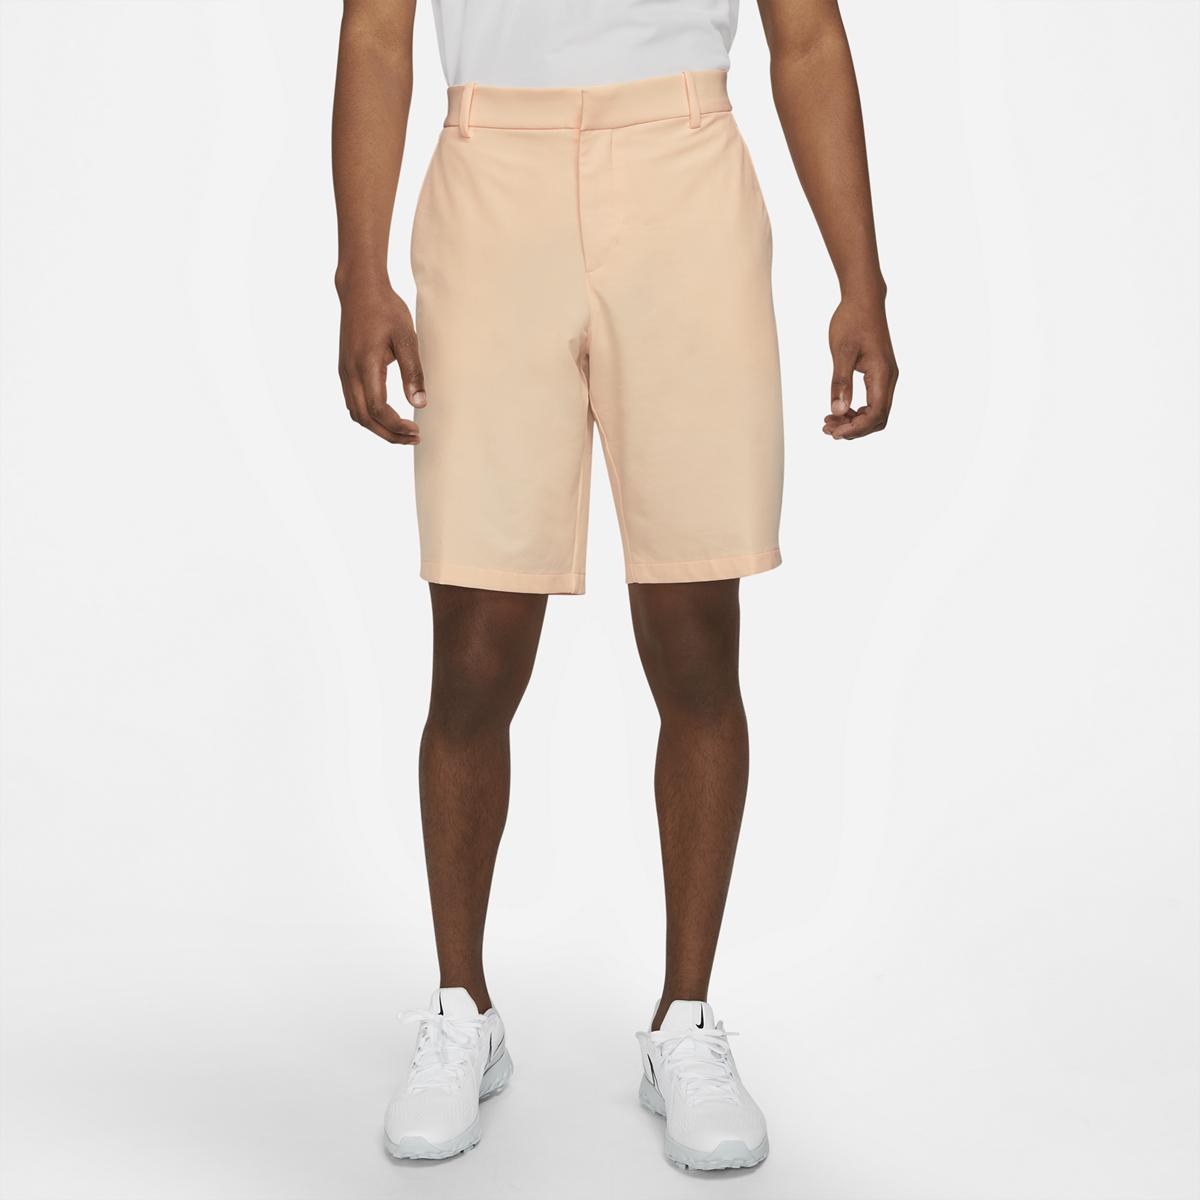 CRIMSON 'Nike Dri-FIT' Golf Shorts - MEN